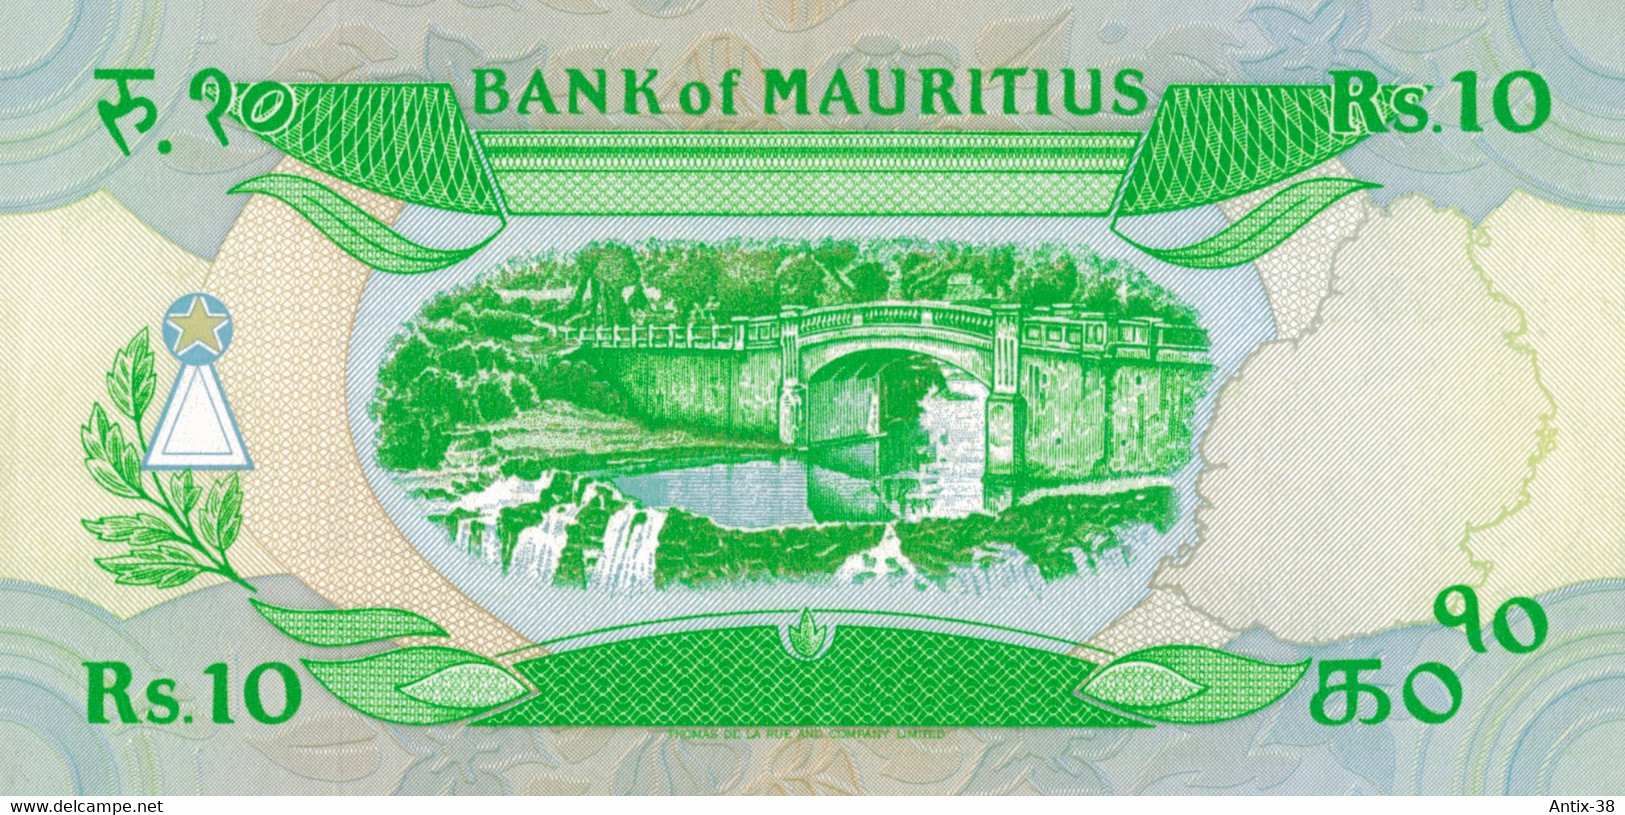 K30 - ILE MAURICE - Billet De 10 ROUPIES - Mauritius